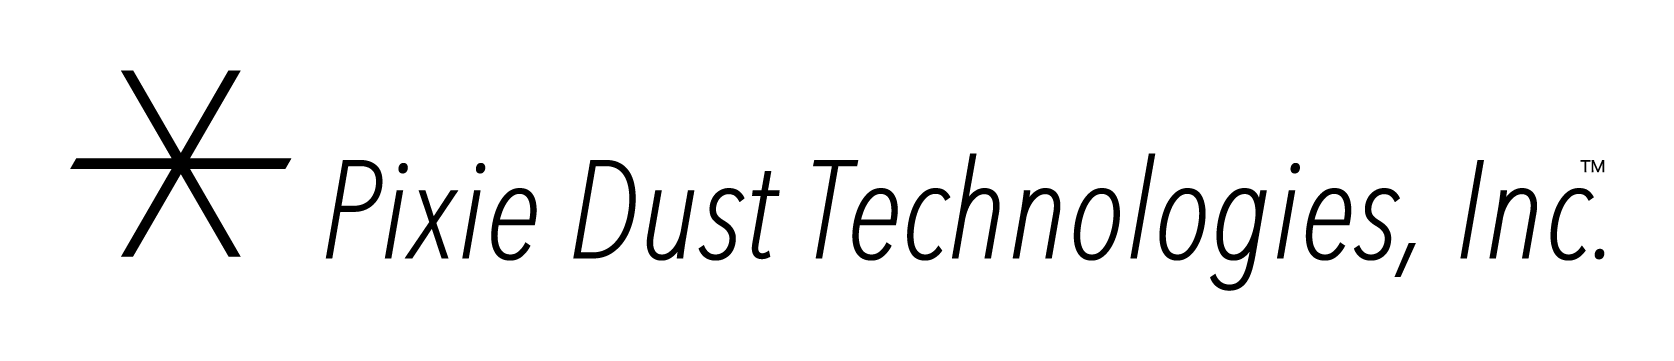 Pixie Dust Technologies, Inc Logo